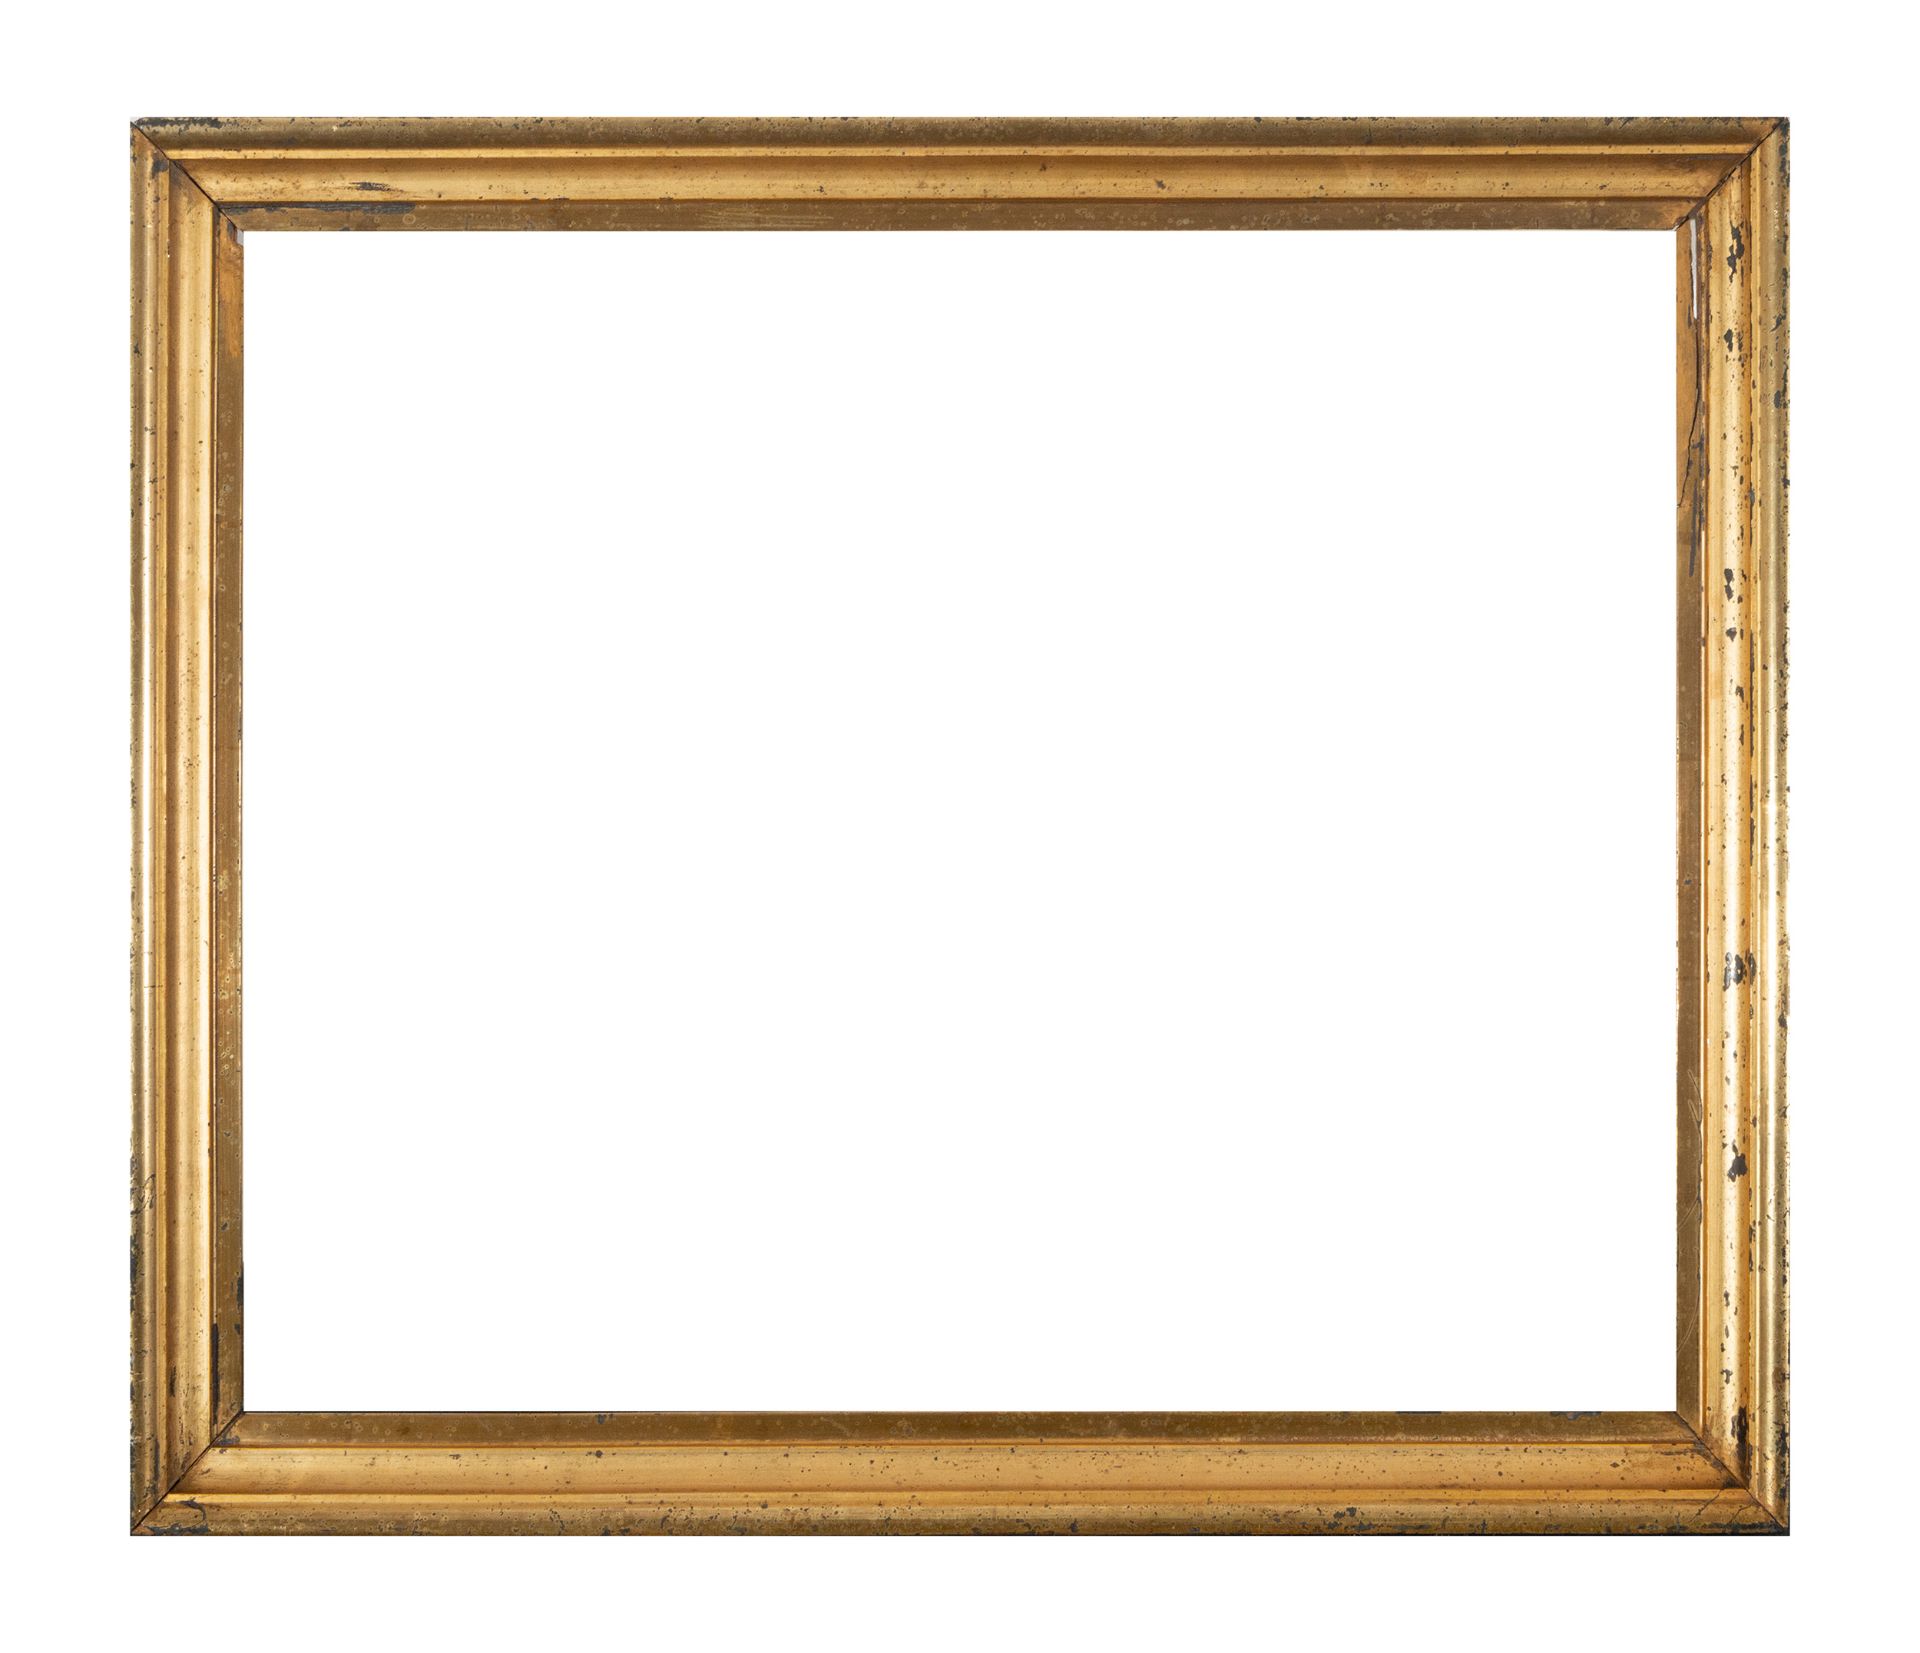 Smooth gilt frame, 19th century